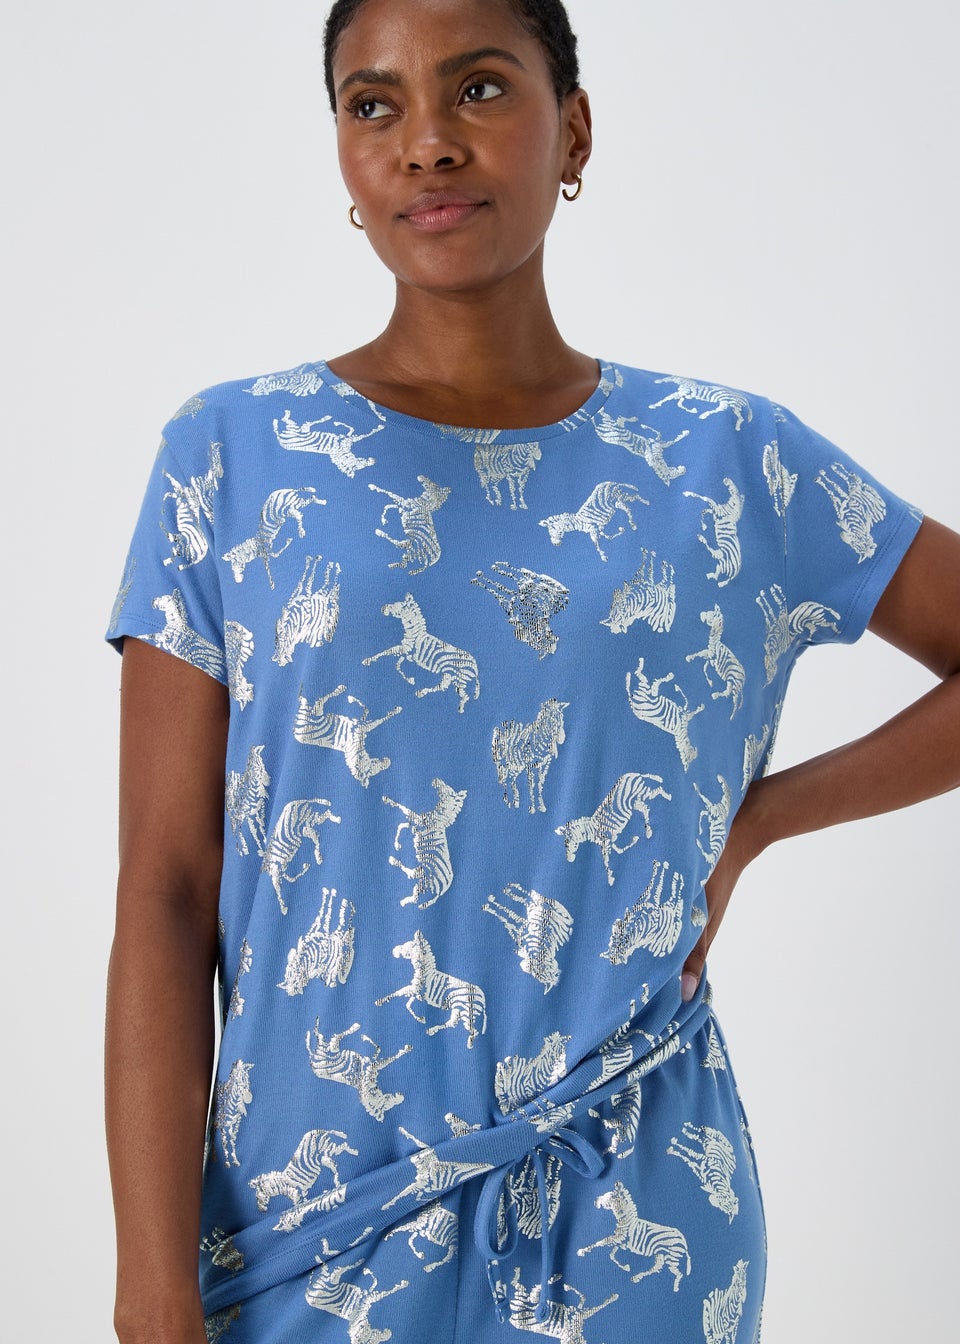 Blue Foil Animal Print Pyjama Set